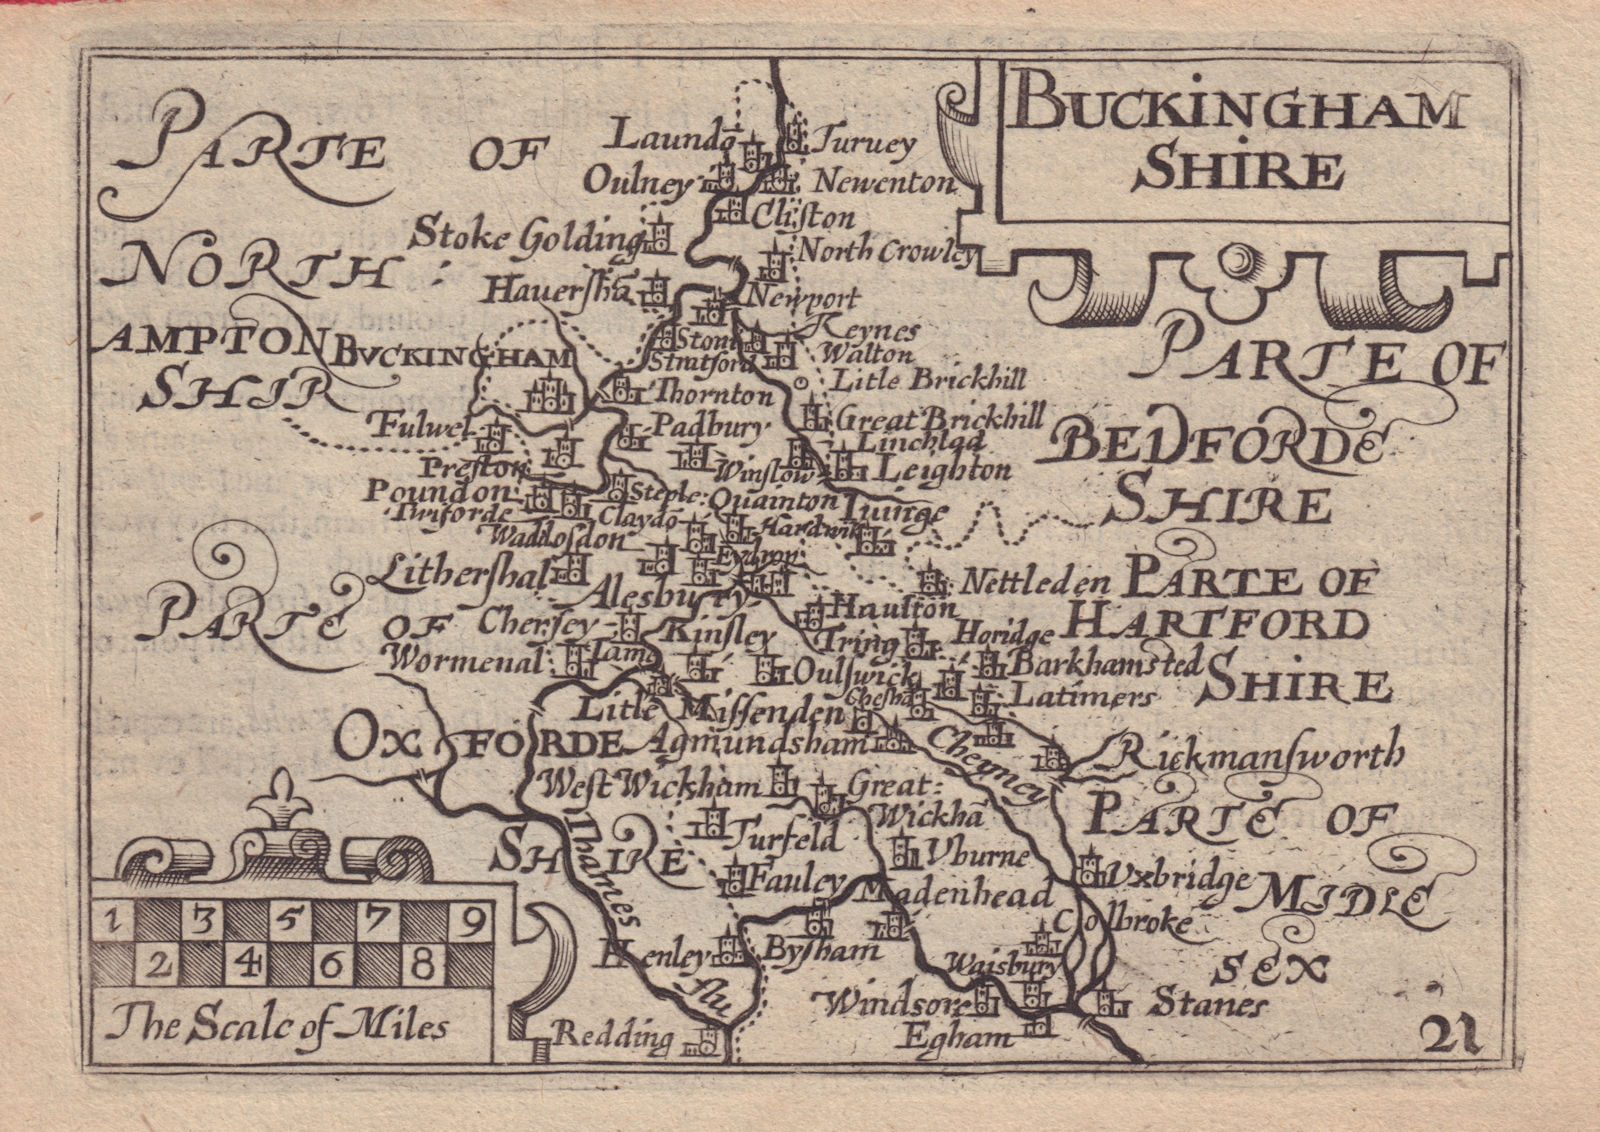 Buckingham Shire by Keere. "Speed miniature" Buckinghamshire county map 1632